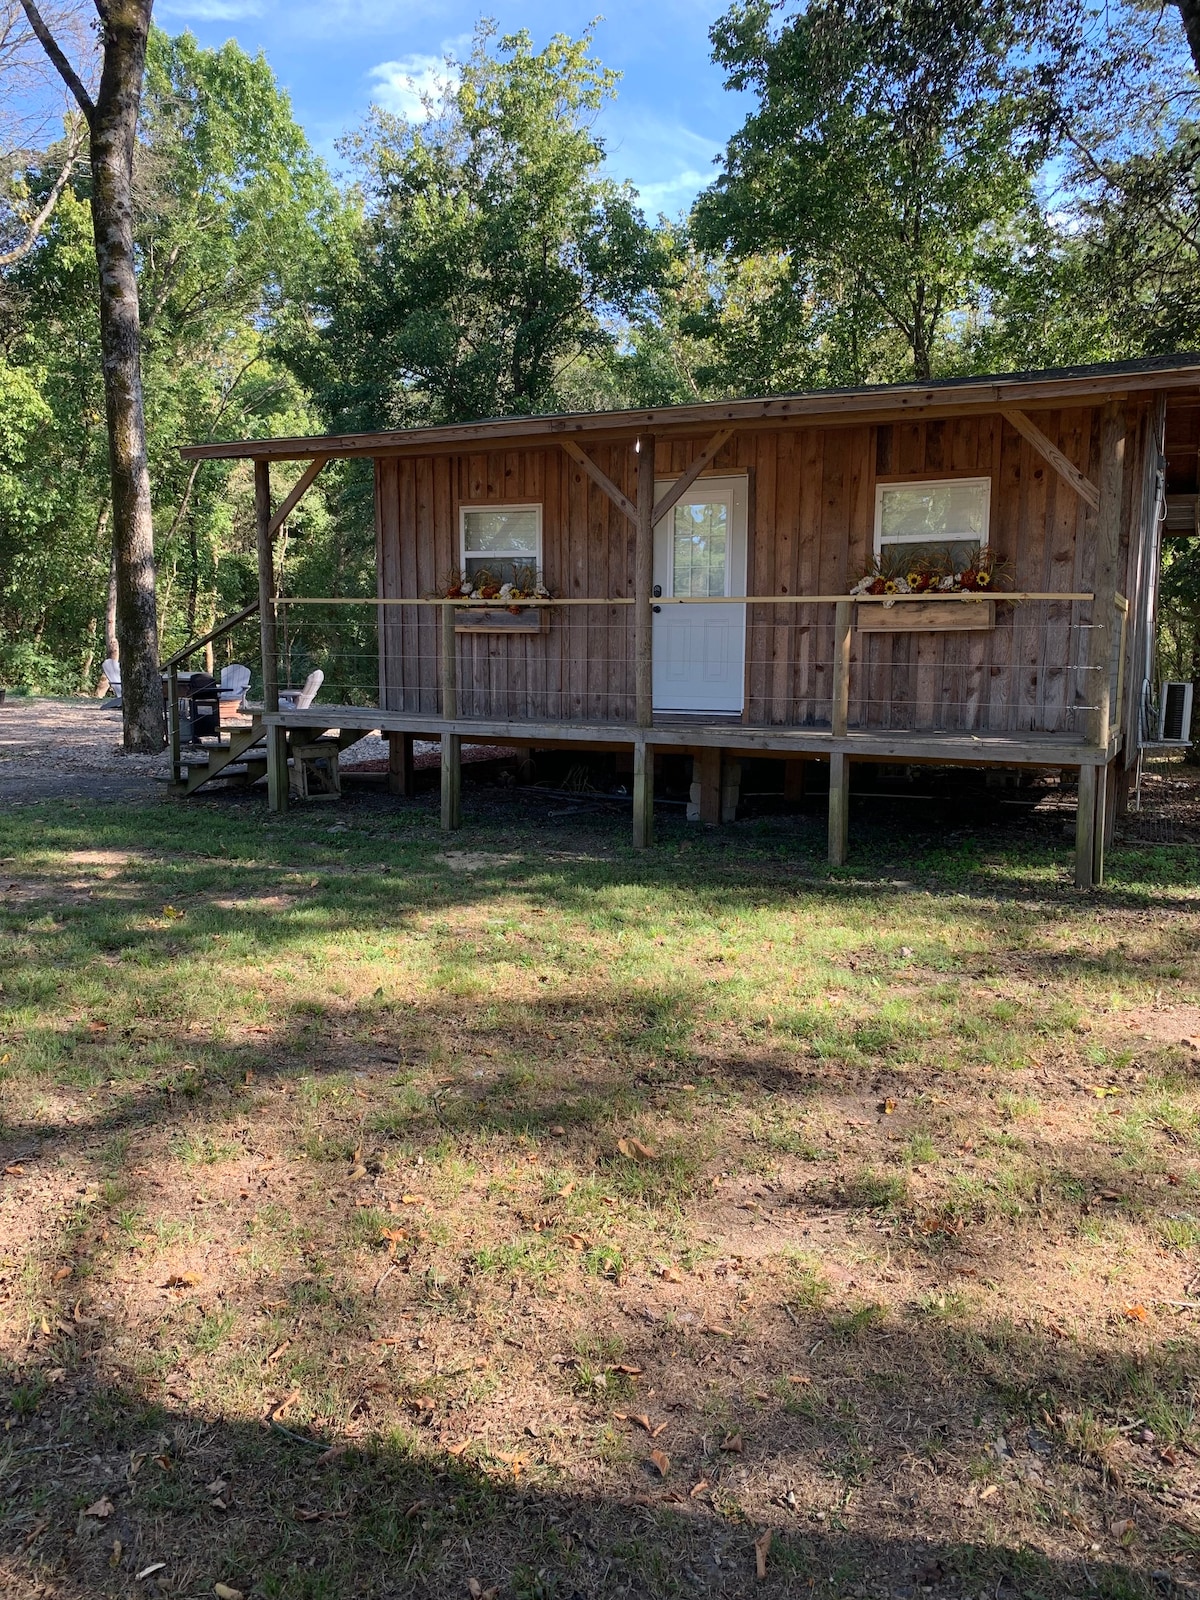 The Cabin at Lick Creek